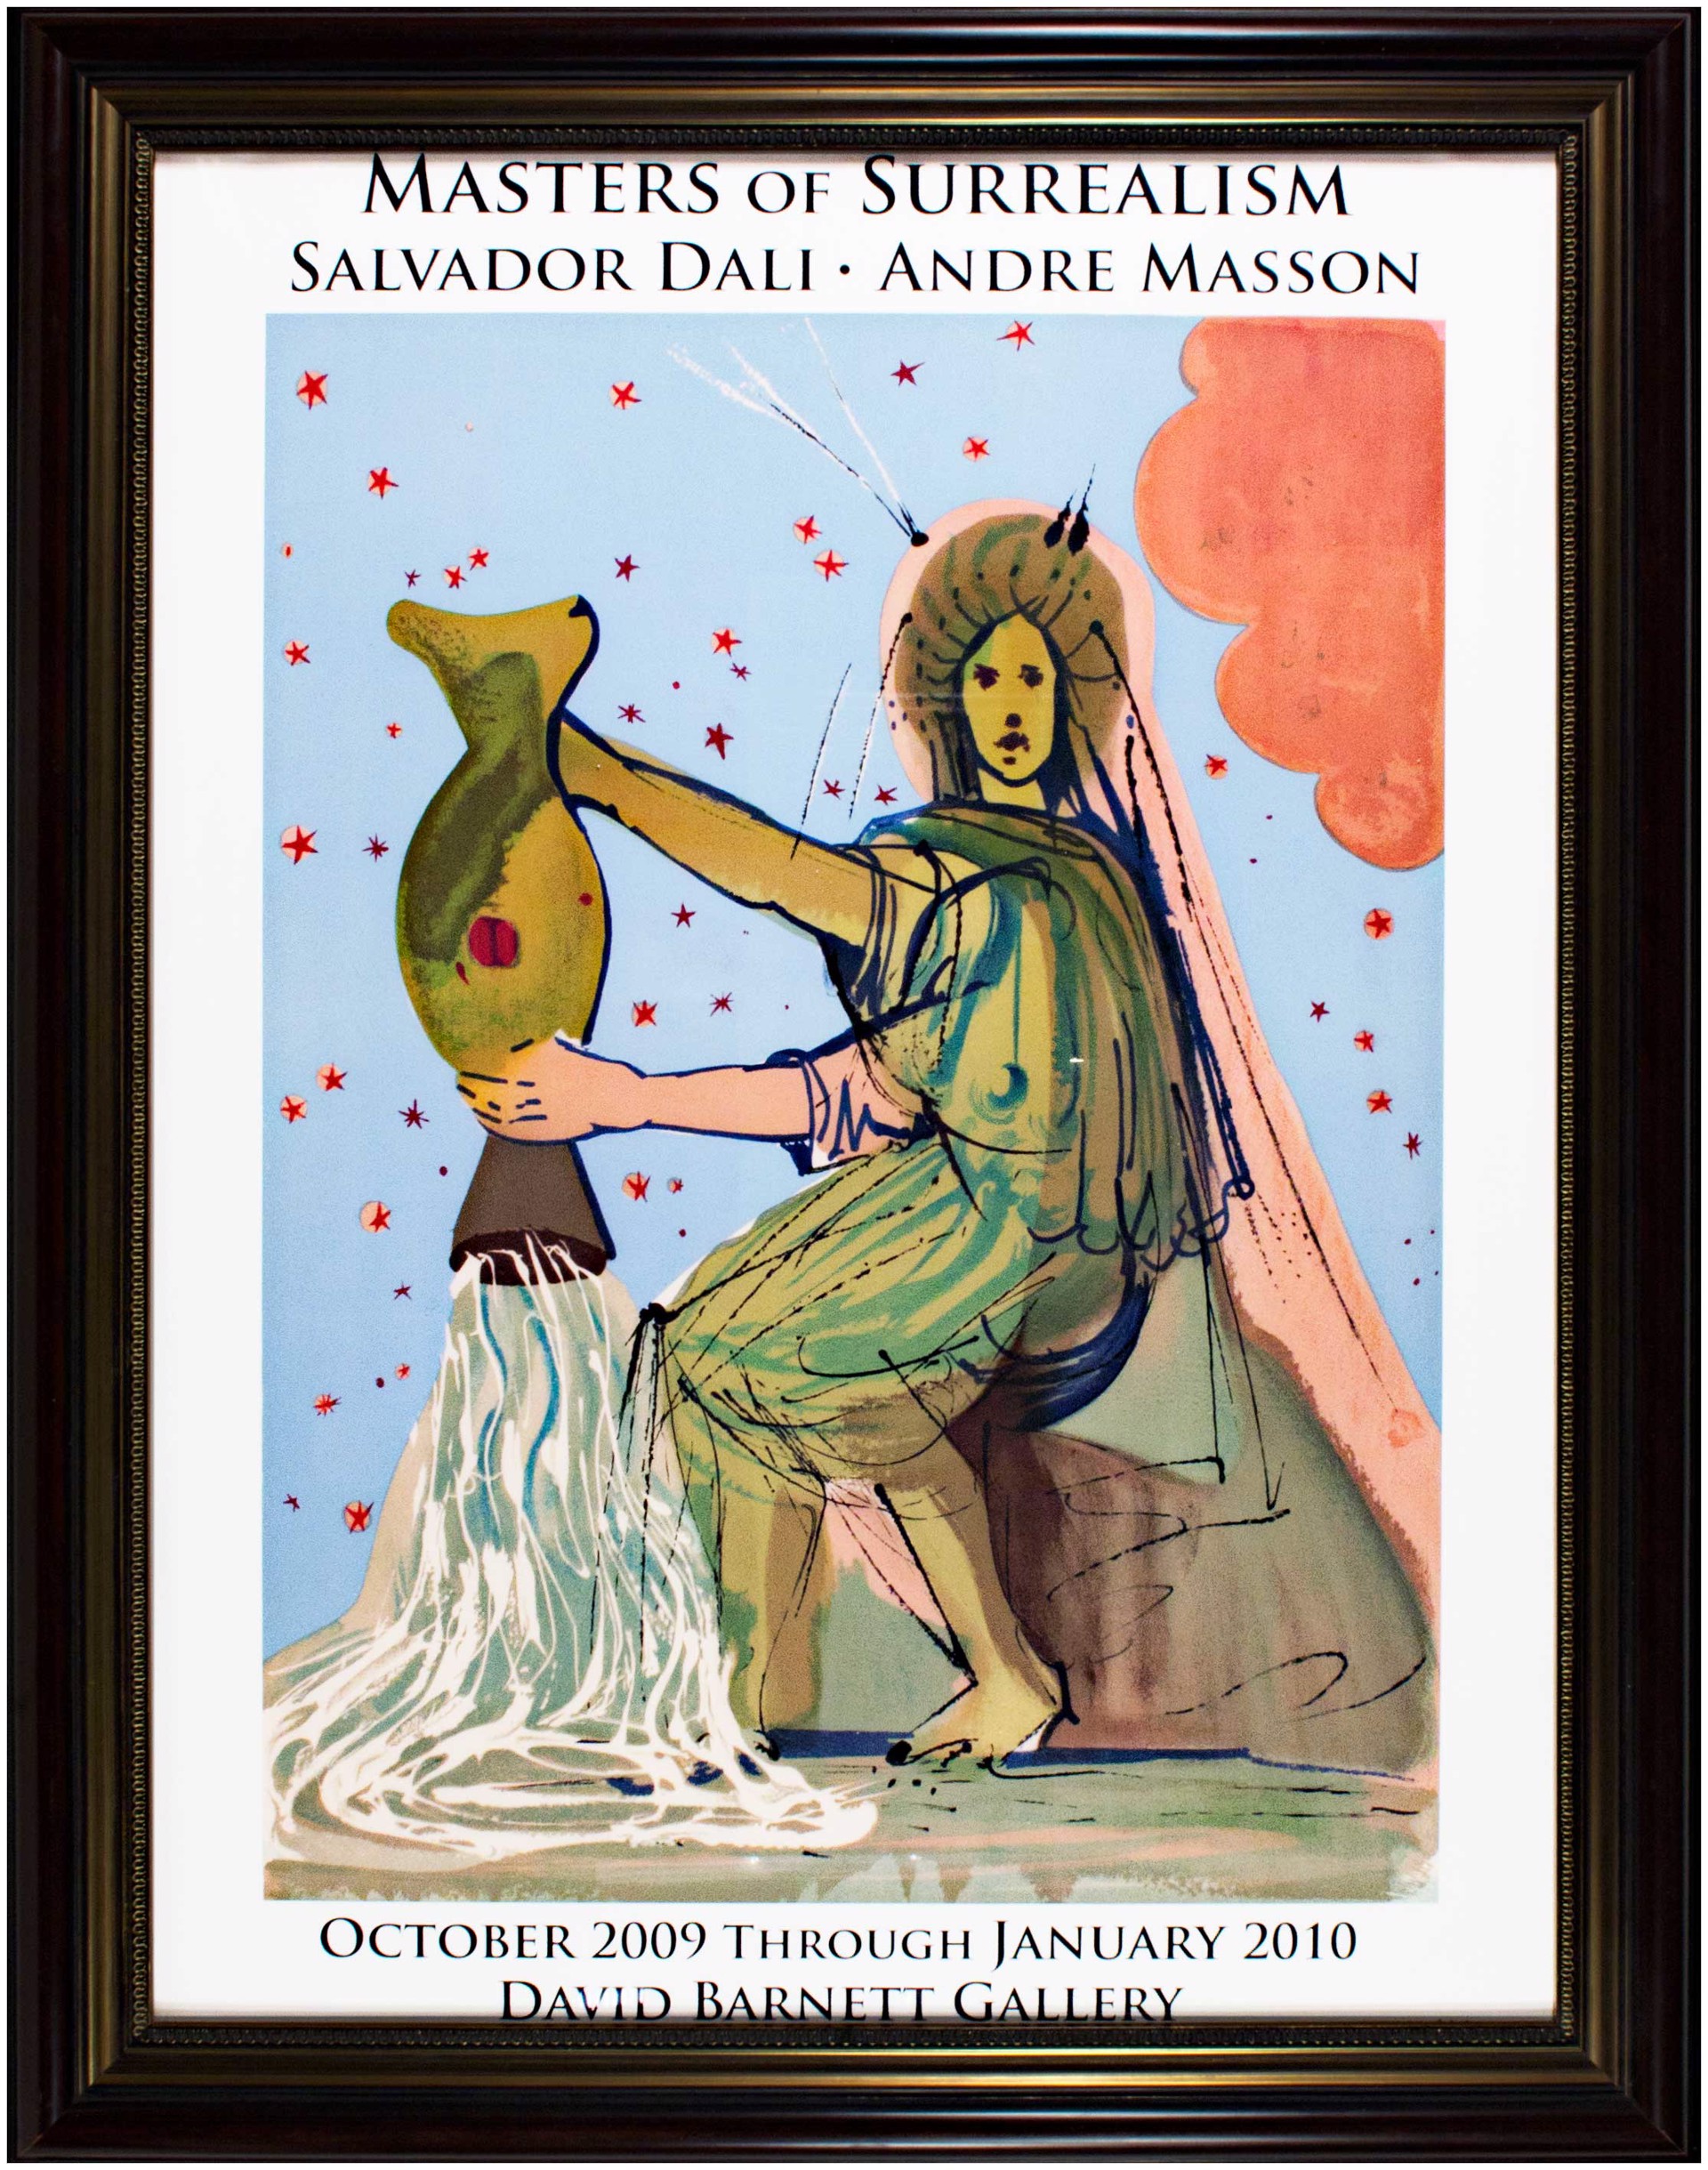 Masters of Surrealism: Dali & Masson Oct. '09-Jan. '10 D. Barnett Gallery Exhibit by Salvador Dali